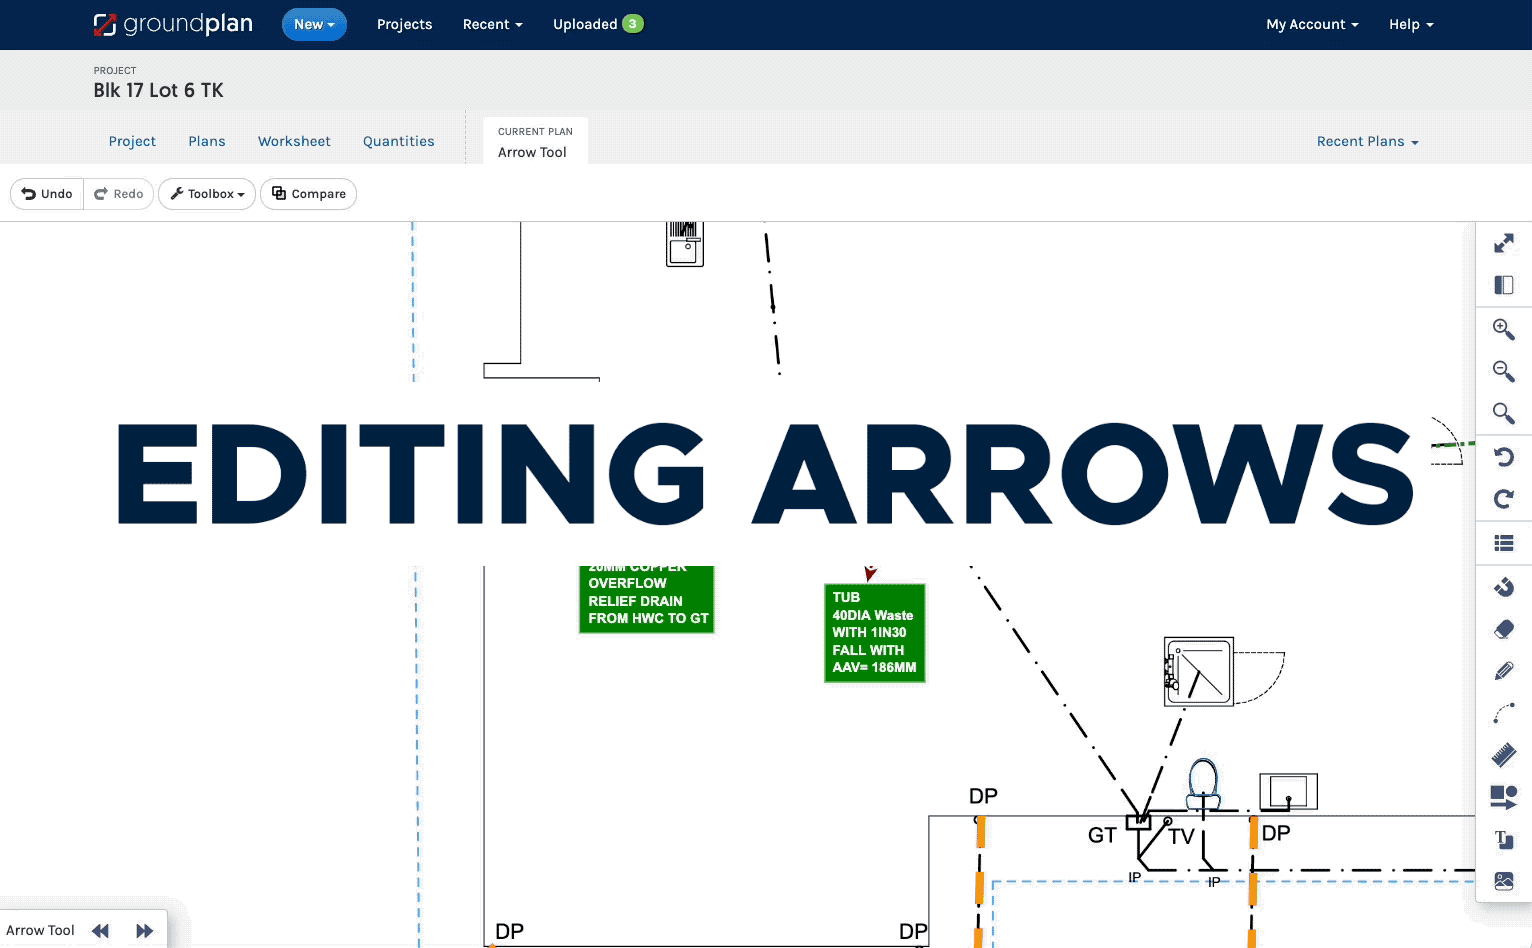 D3 - Editing Arrows